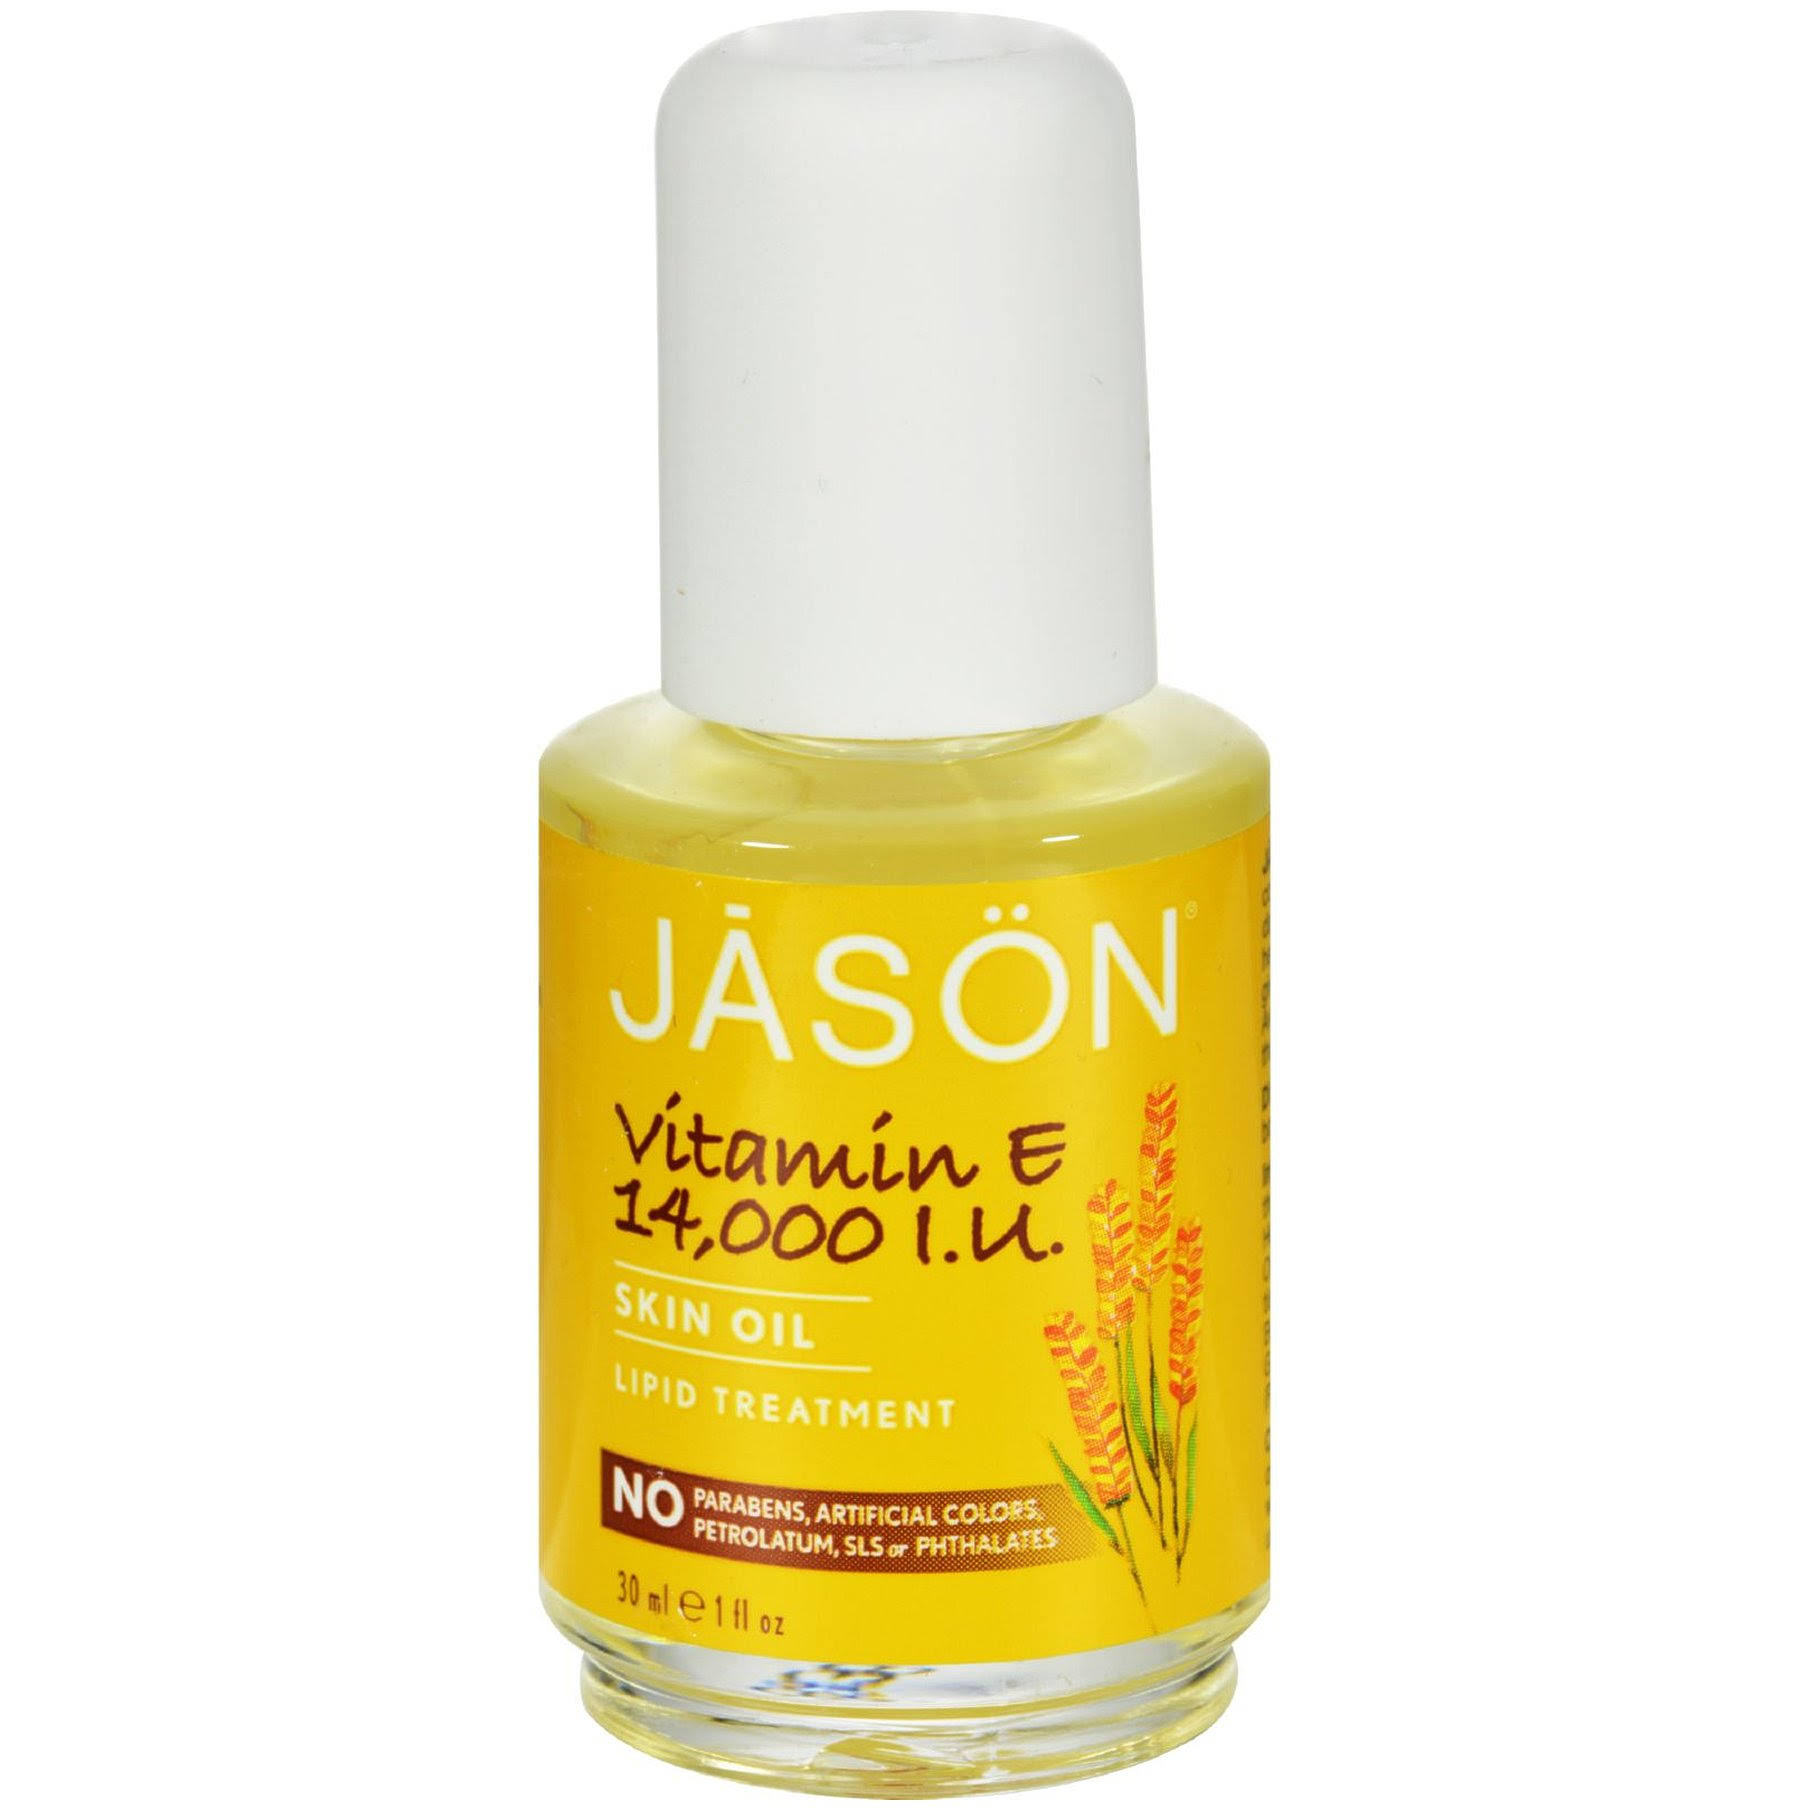 Jason Vitamin E Pure Beauty Oil - 14,000 I.U.